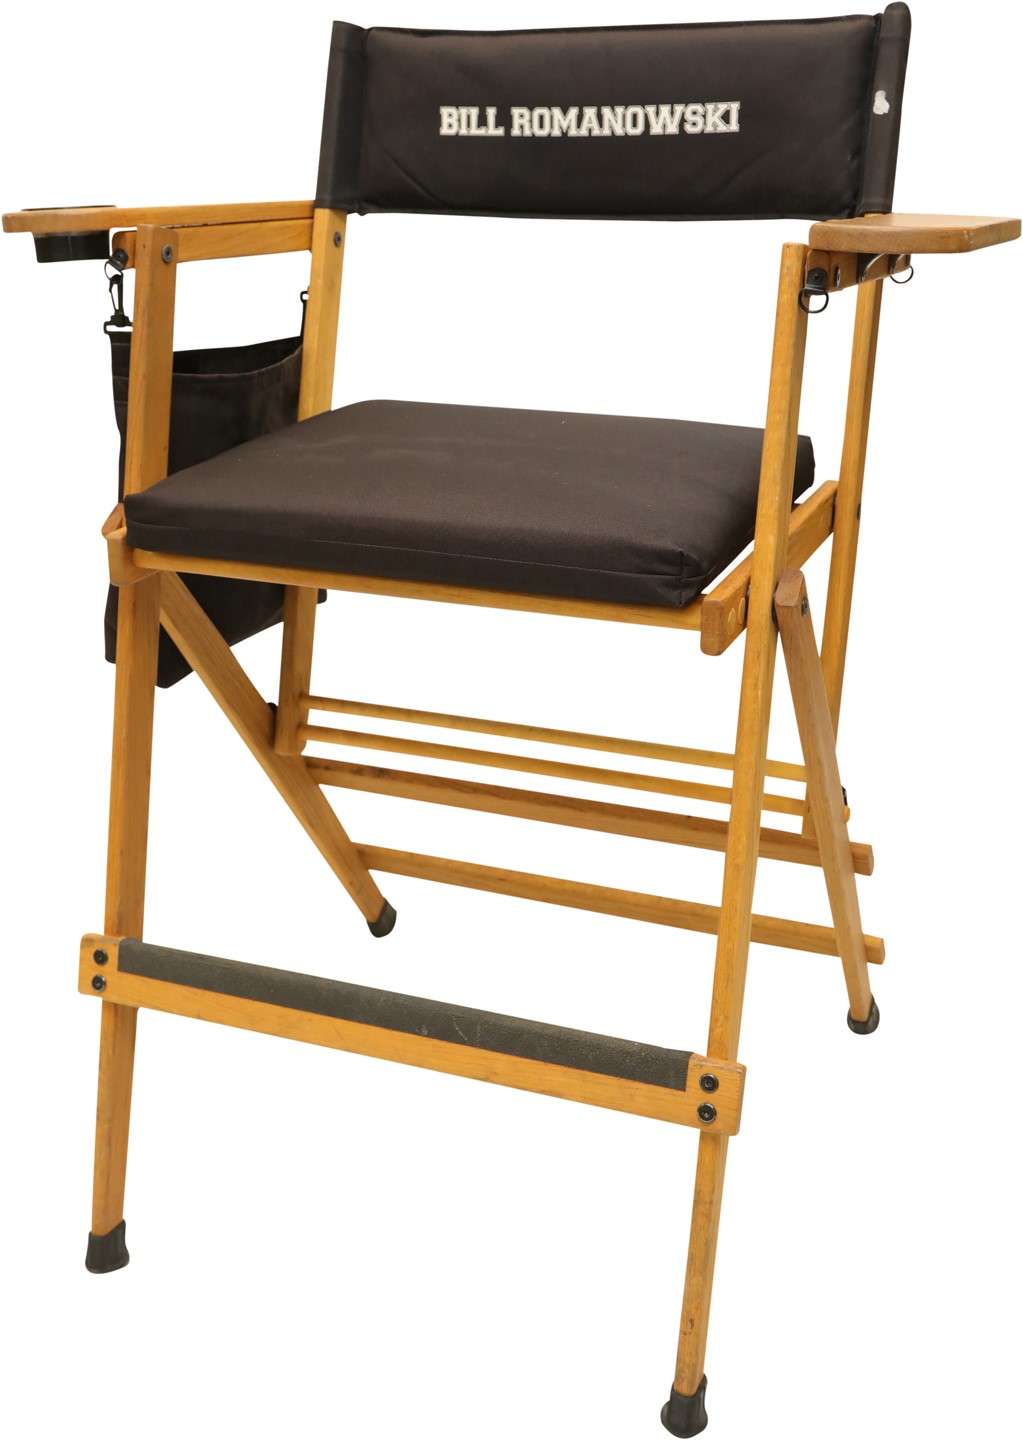 Bill Romanowski Storage Find - Bill Romanowski's Longest Yard Movie Set Chair